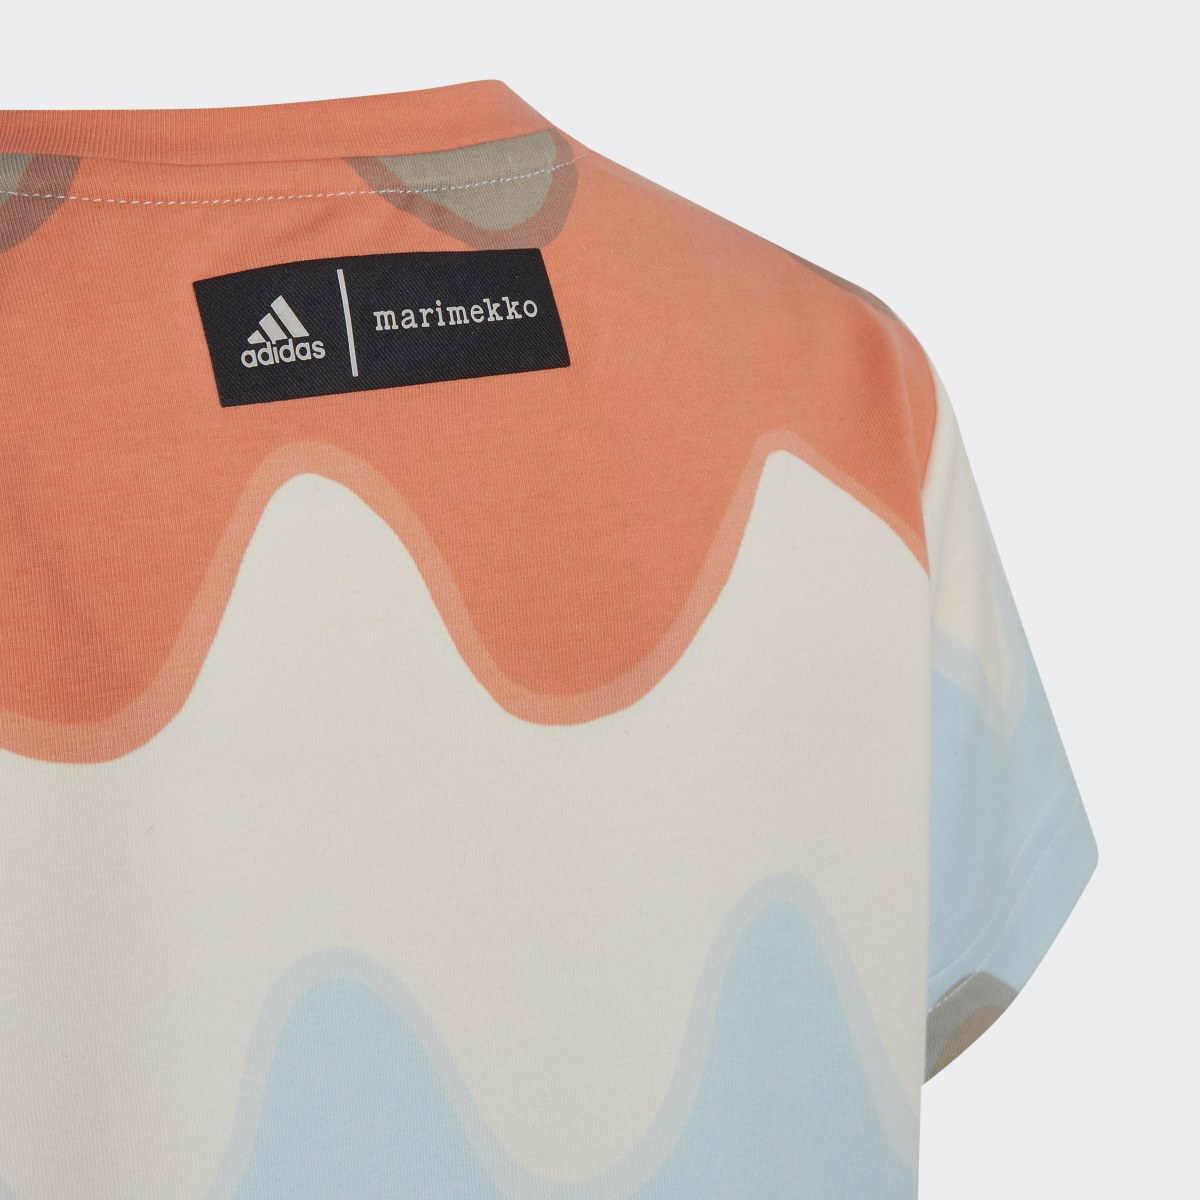 Adidas Marimekko Allover Print Cotton Set. 7